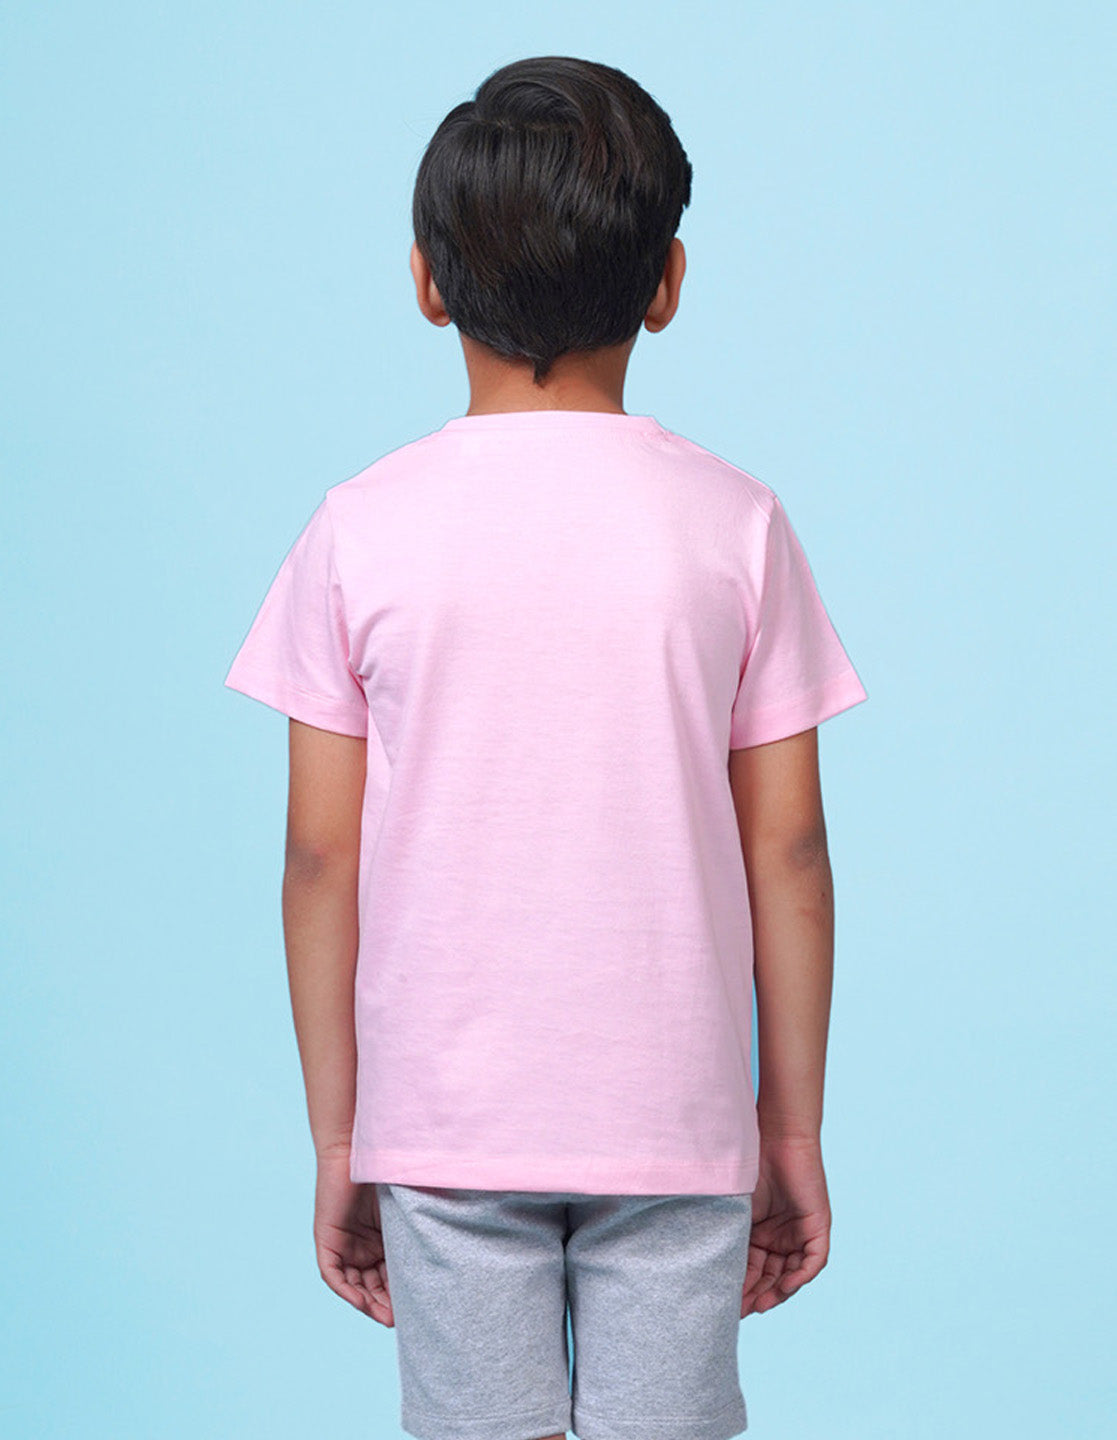 Nusyl Basketball  Printed Light Pink Colour T-shirts